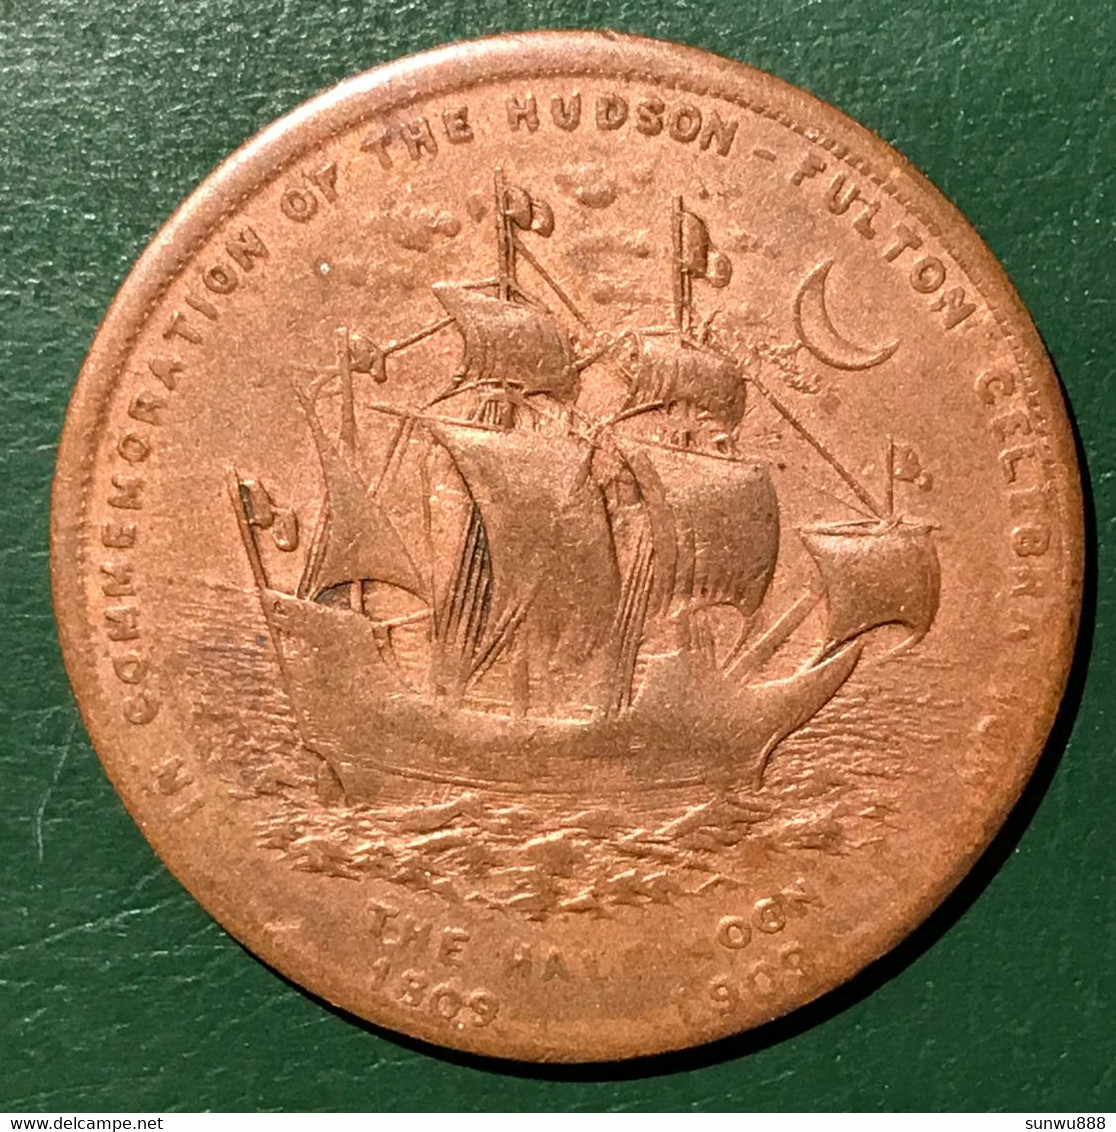 Hudson Fulton Celebration The Half Moon 1609-1909 New York Boat Medal Token RARE (fixed Price) - Firmen